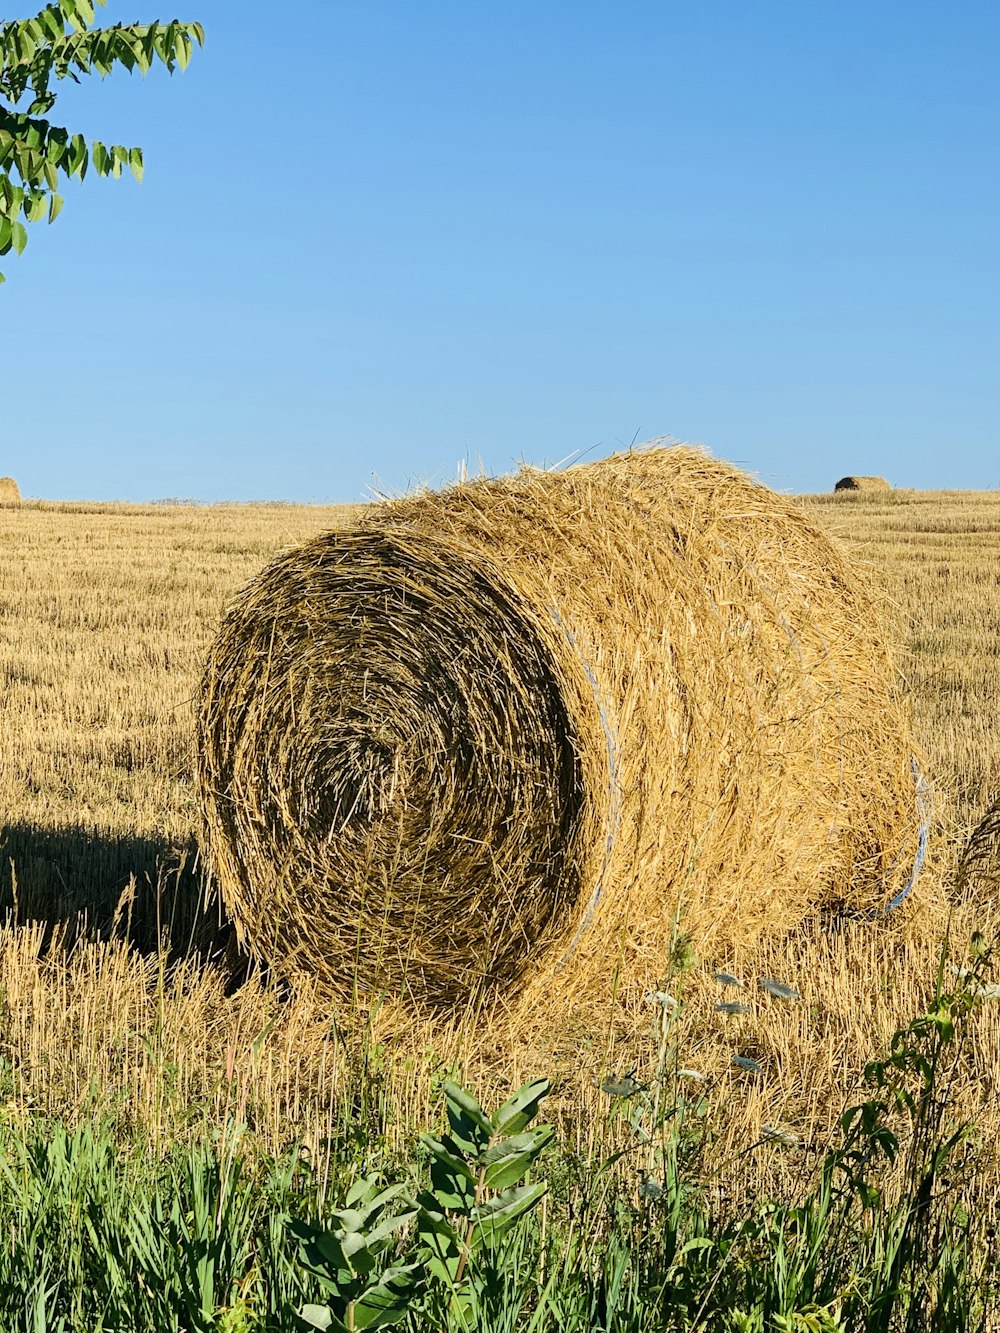 brown hays on green grass field under blue sky during daytime